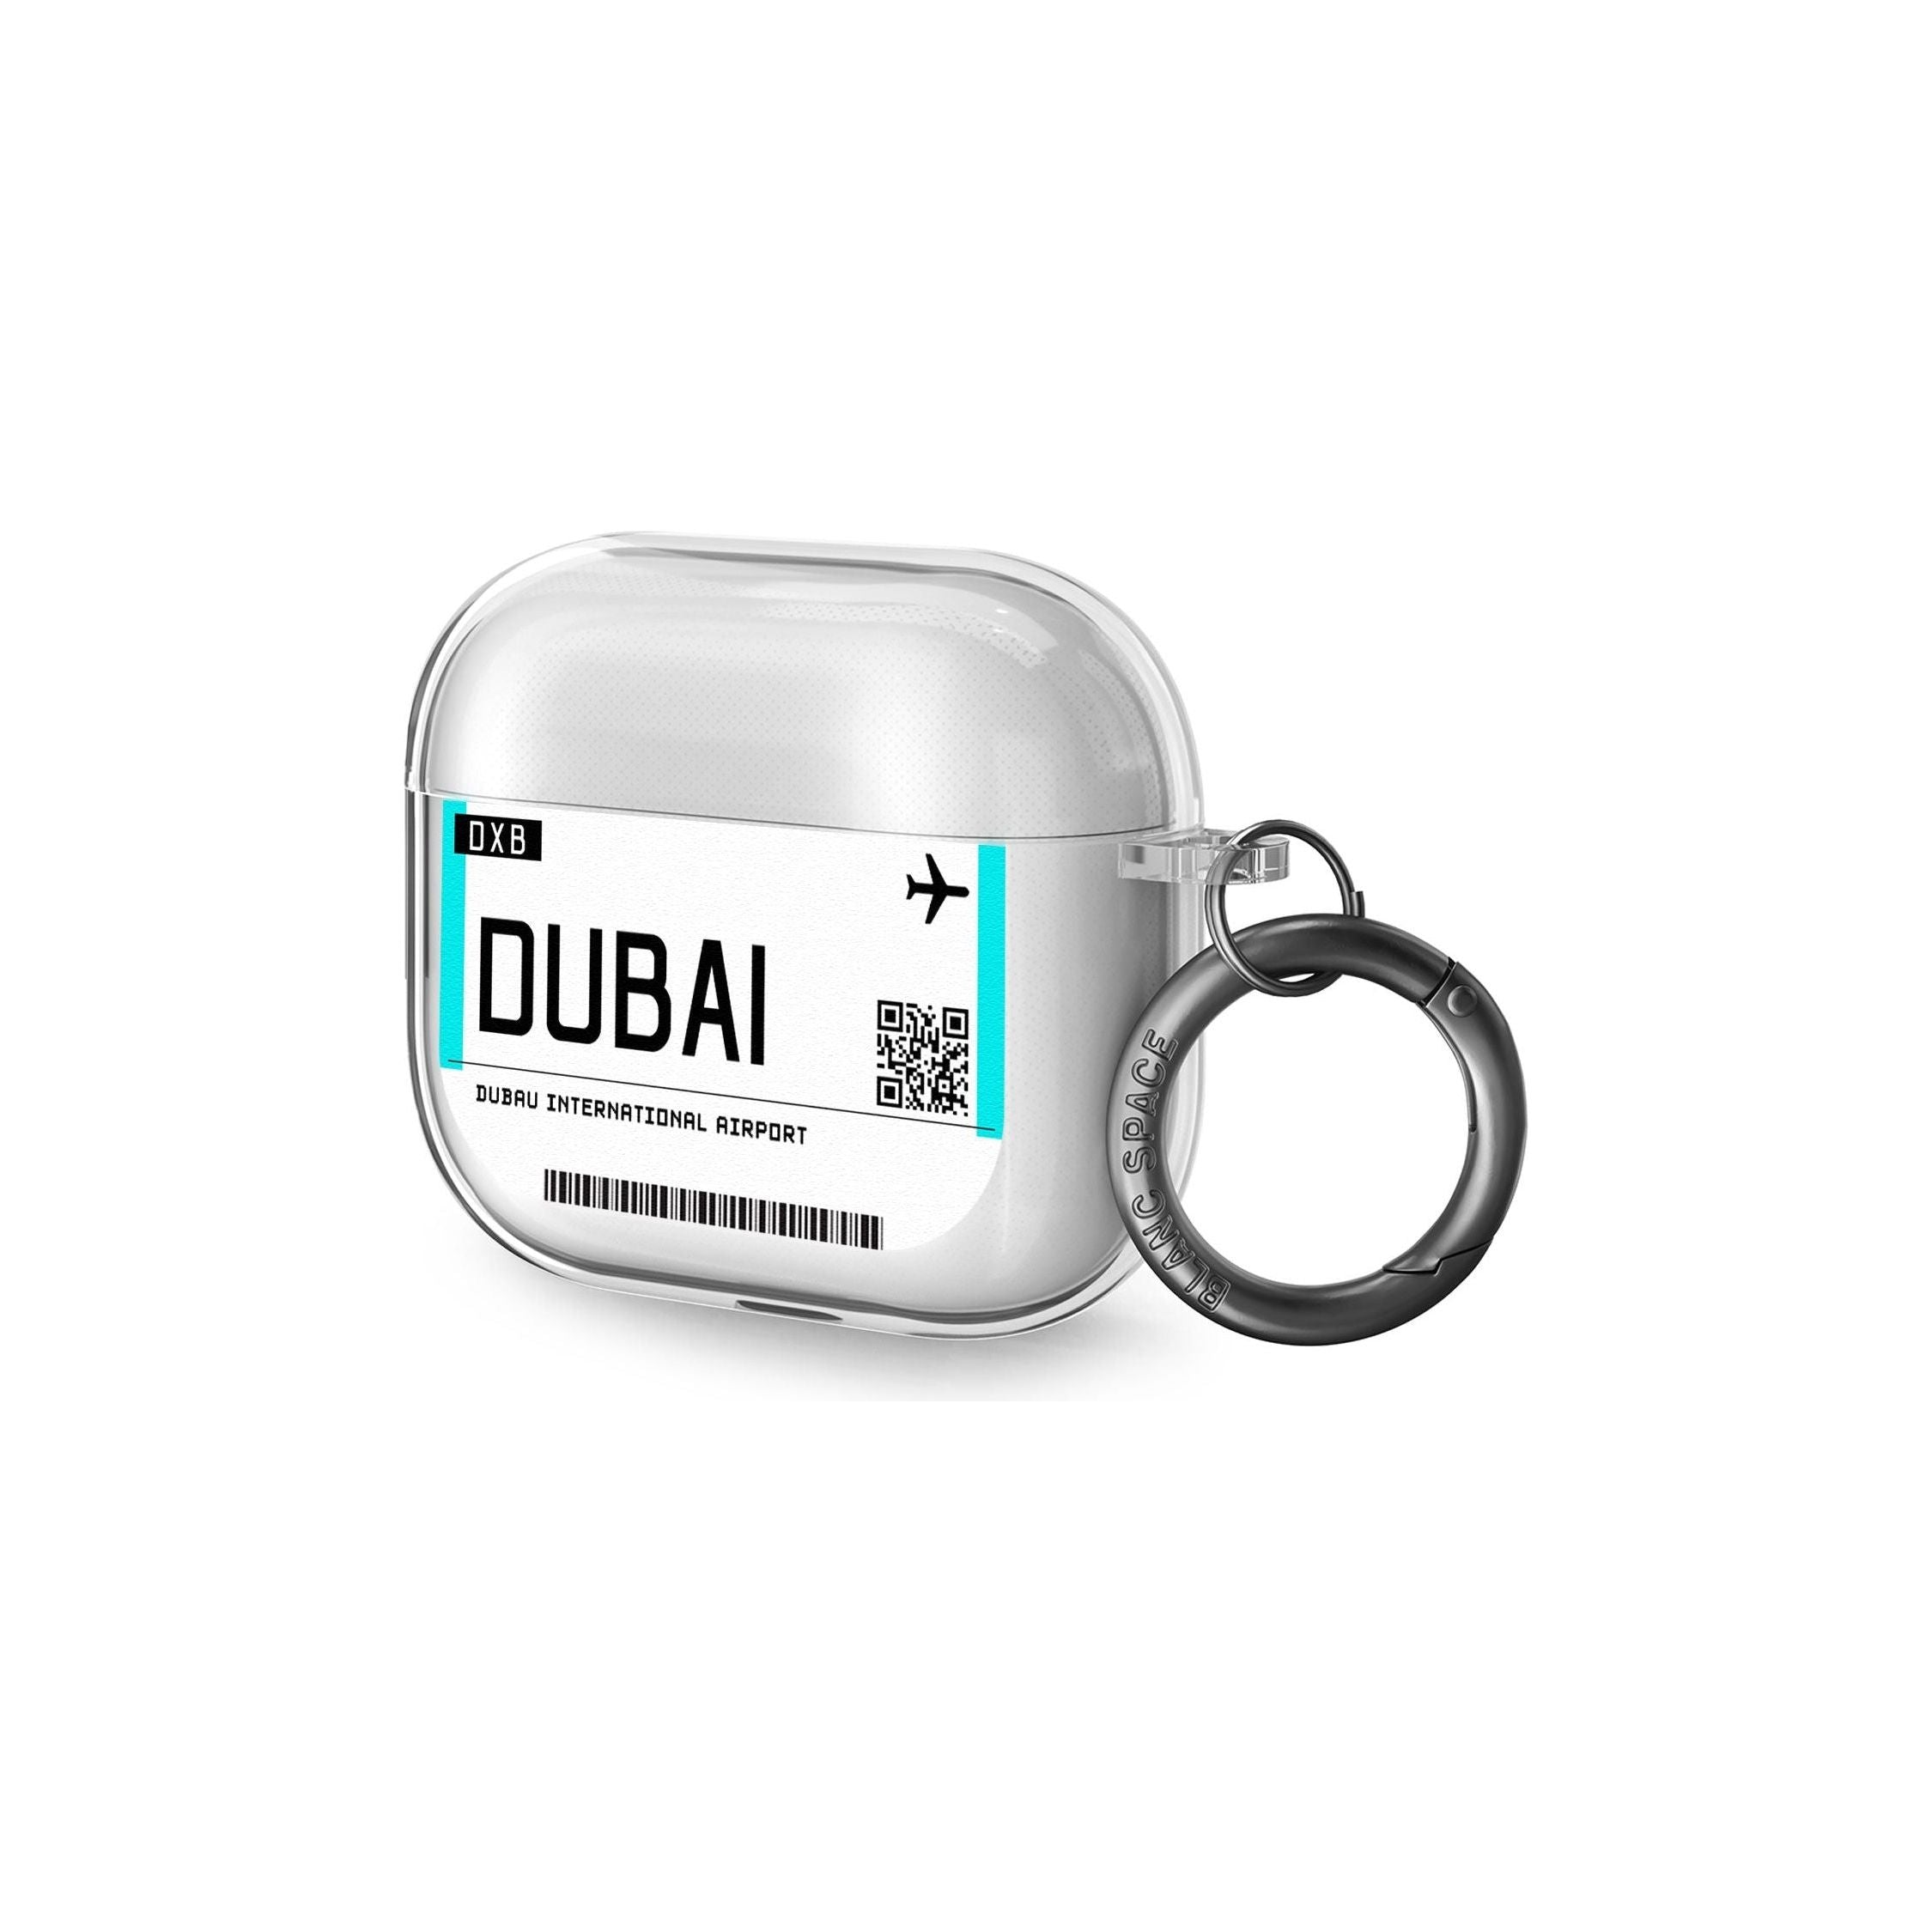 Dubai Boarding Pass Airpods Case (3rd Generation)